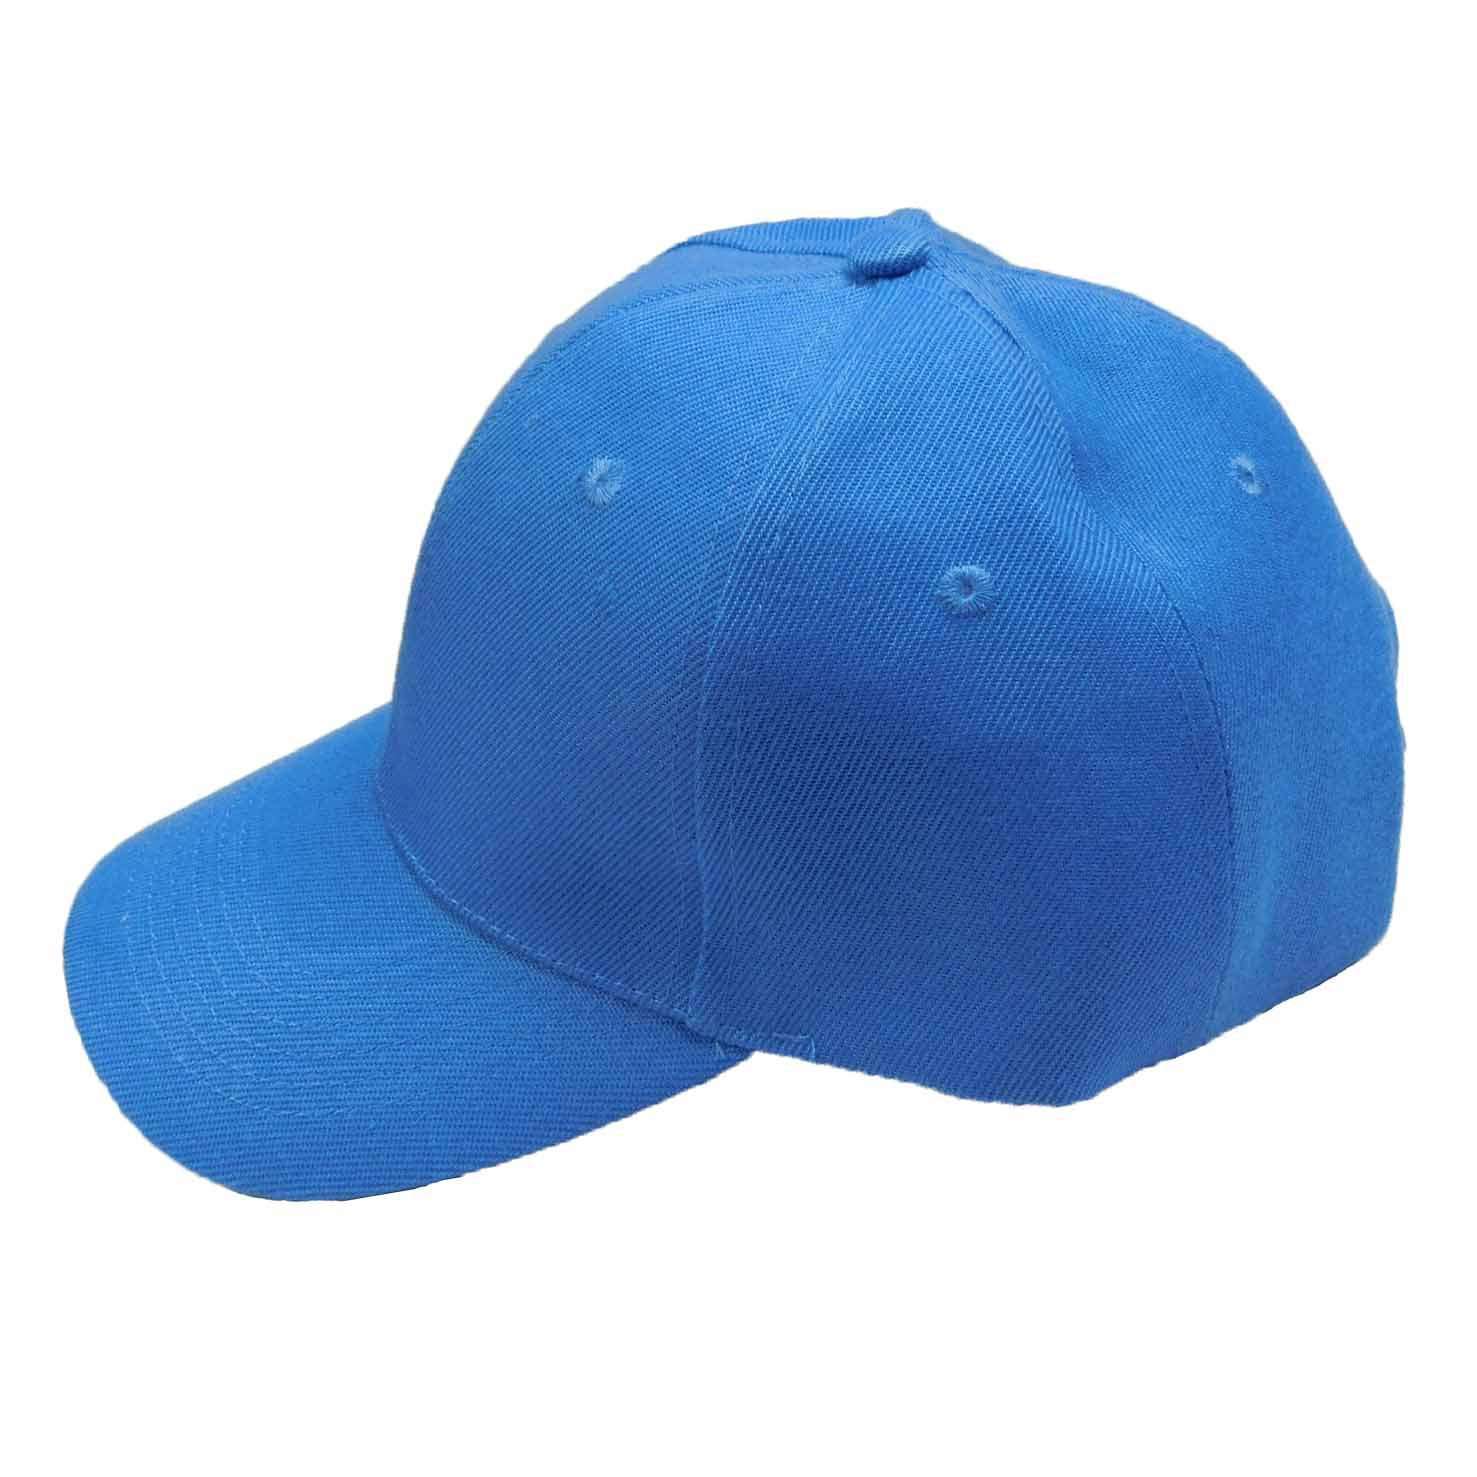 Baseball Cap with Stitched Bill, Cap - SetarTrading Hats 